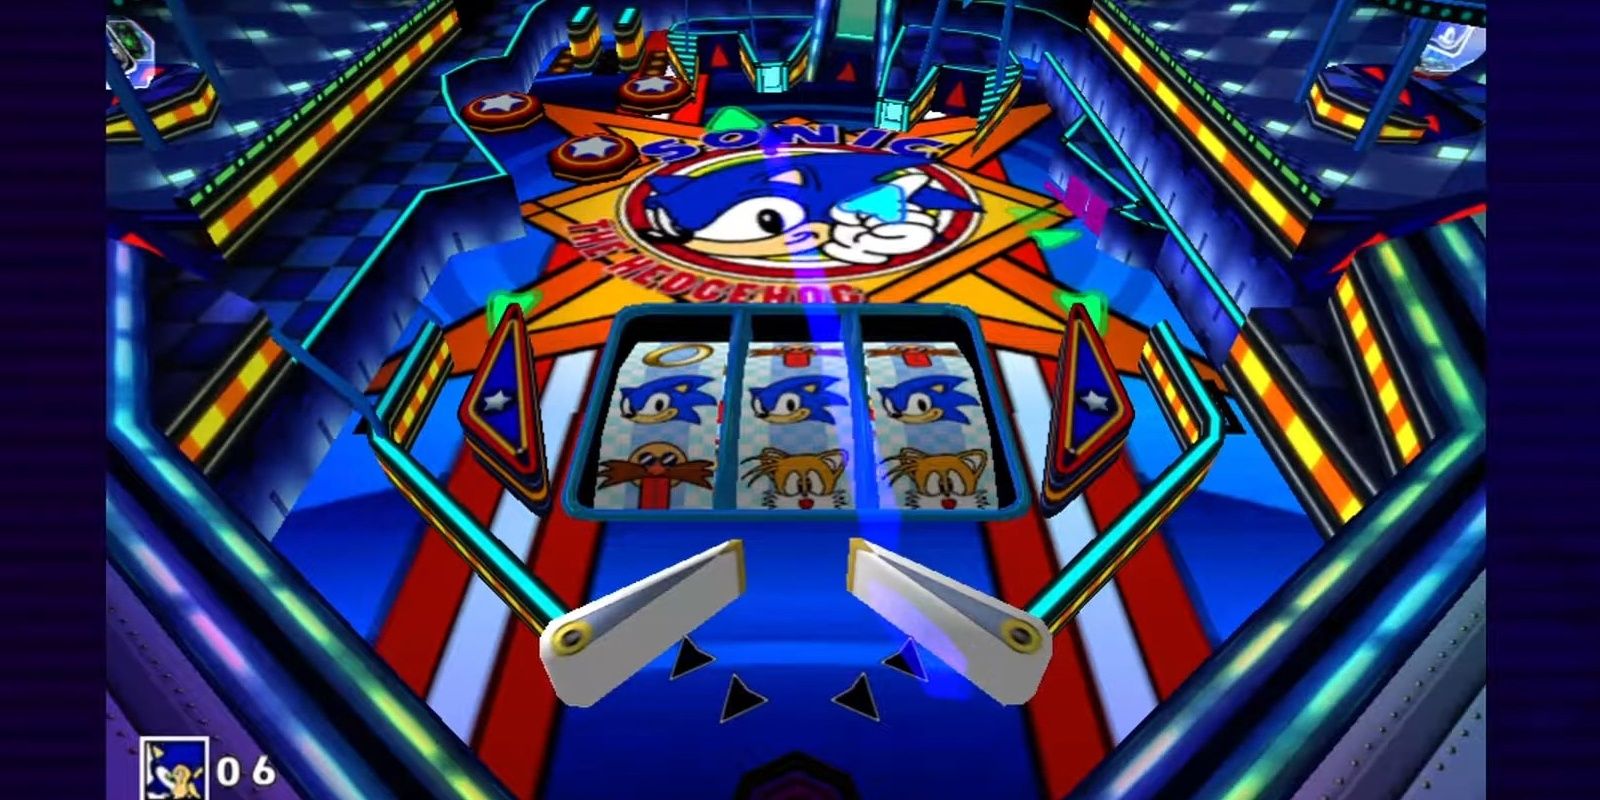 Sonic getting bounced hard by a flipper in Casinopolis zone in Sonic Adventure.